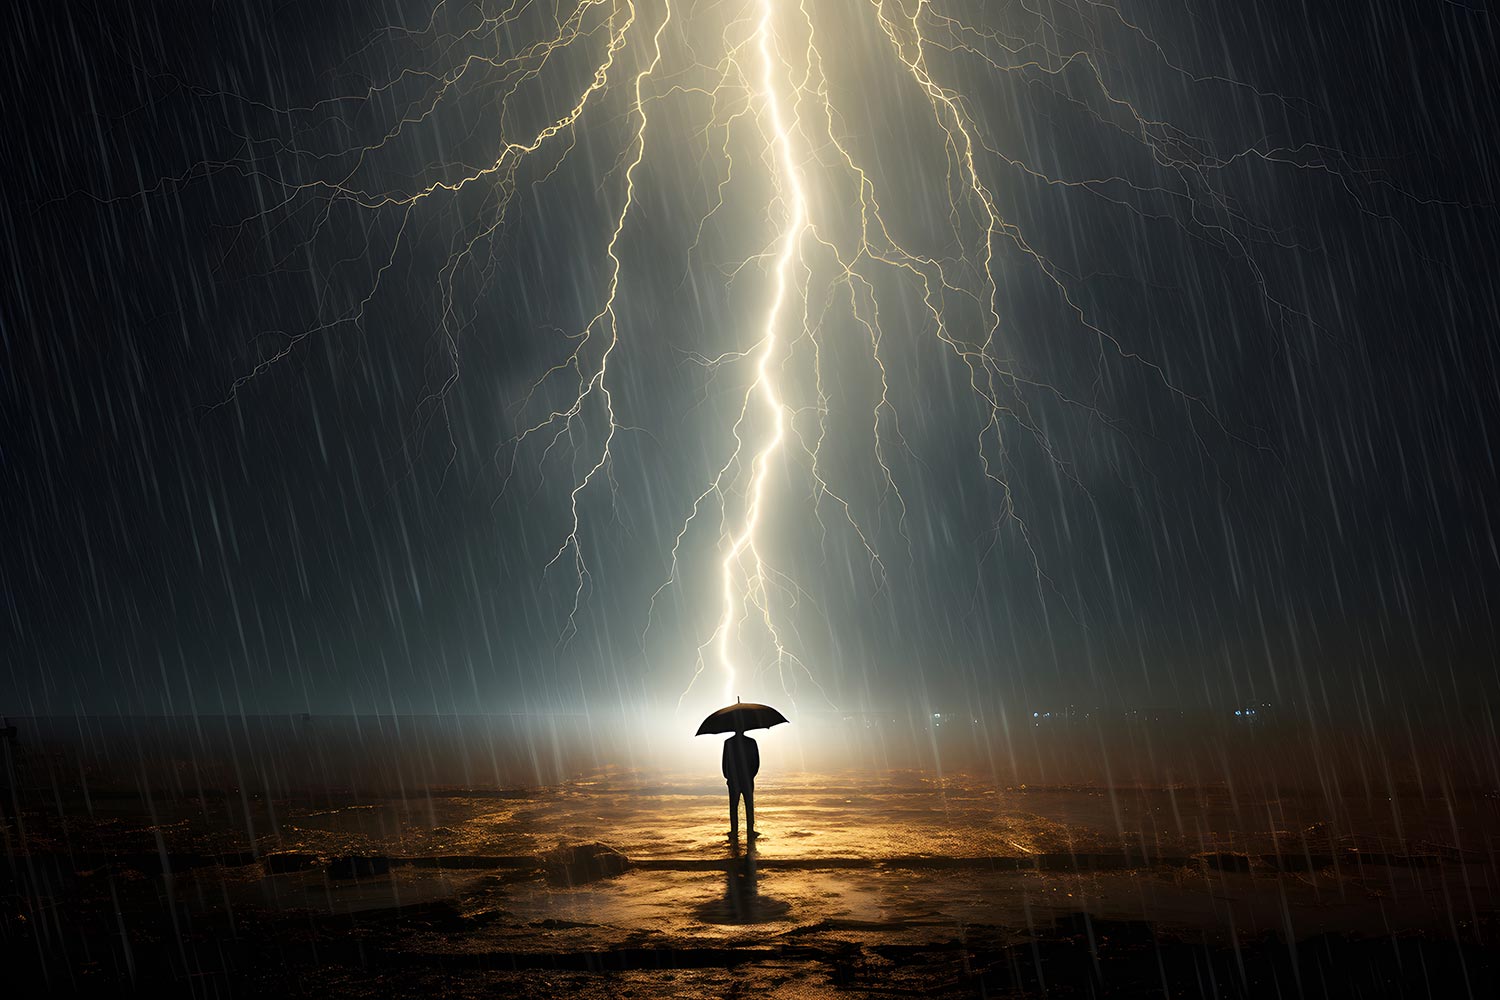 Lightning strikes a man with an umbrella